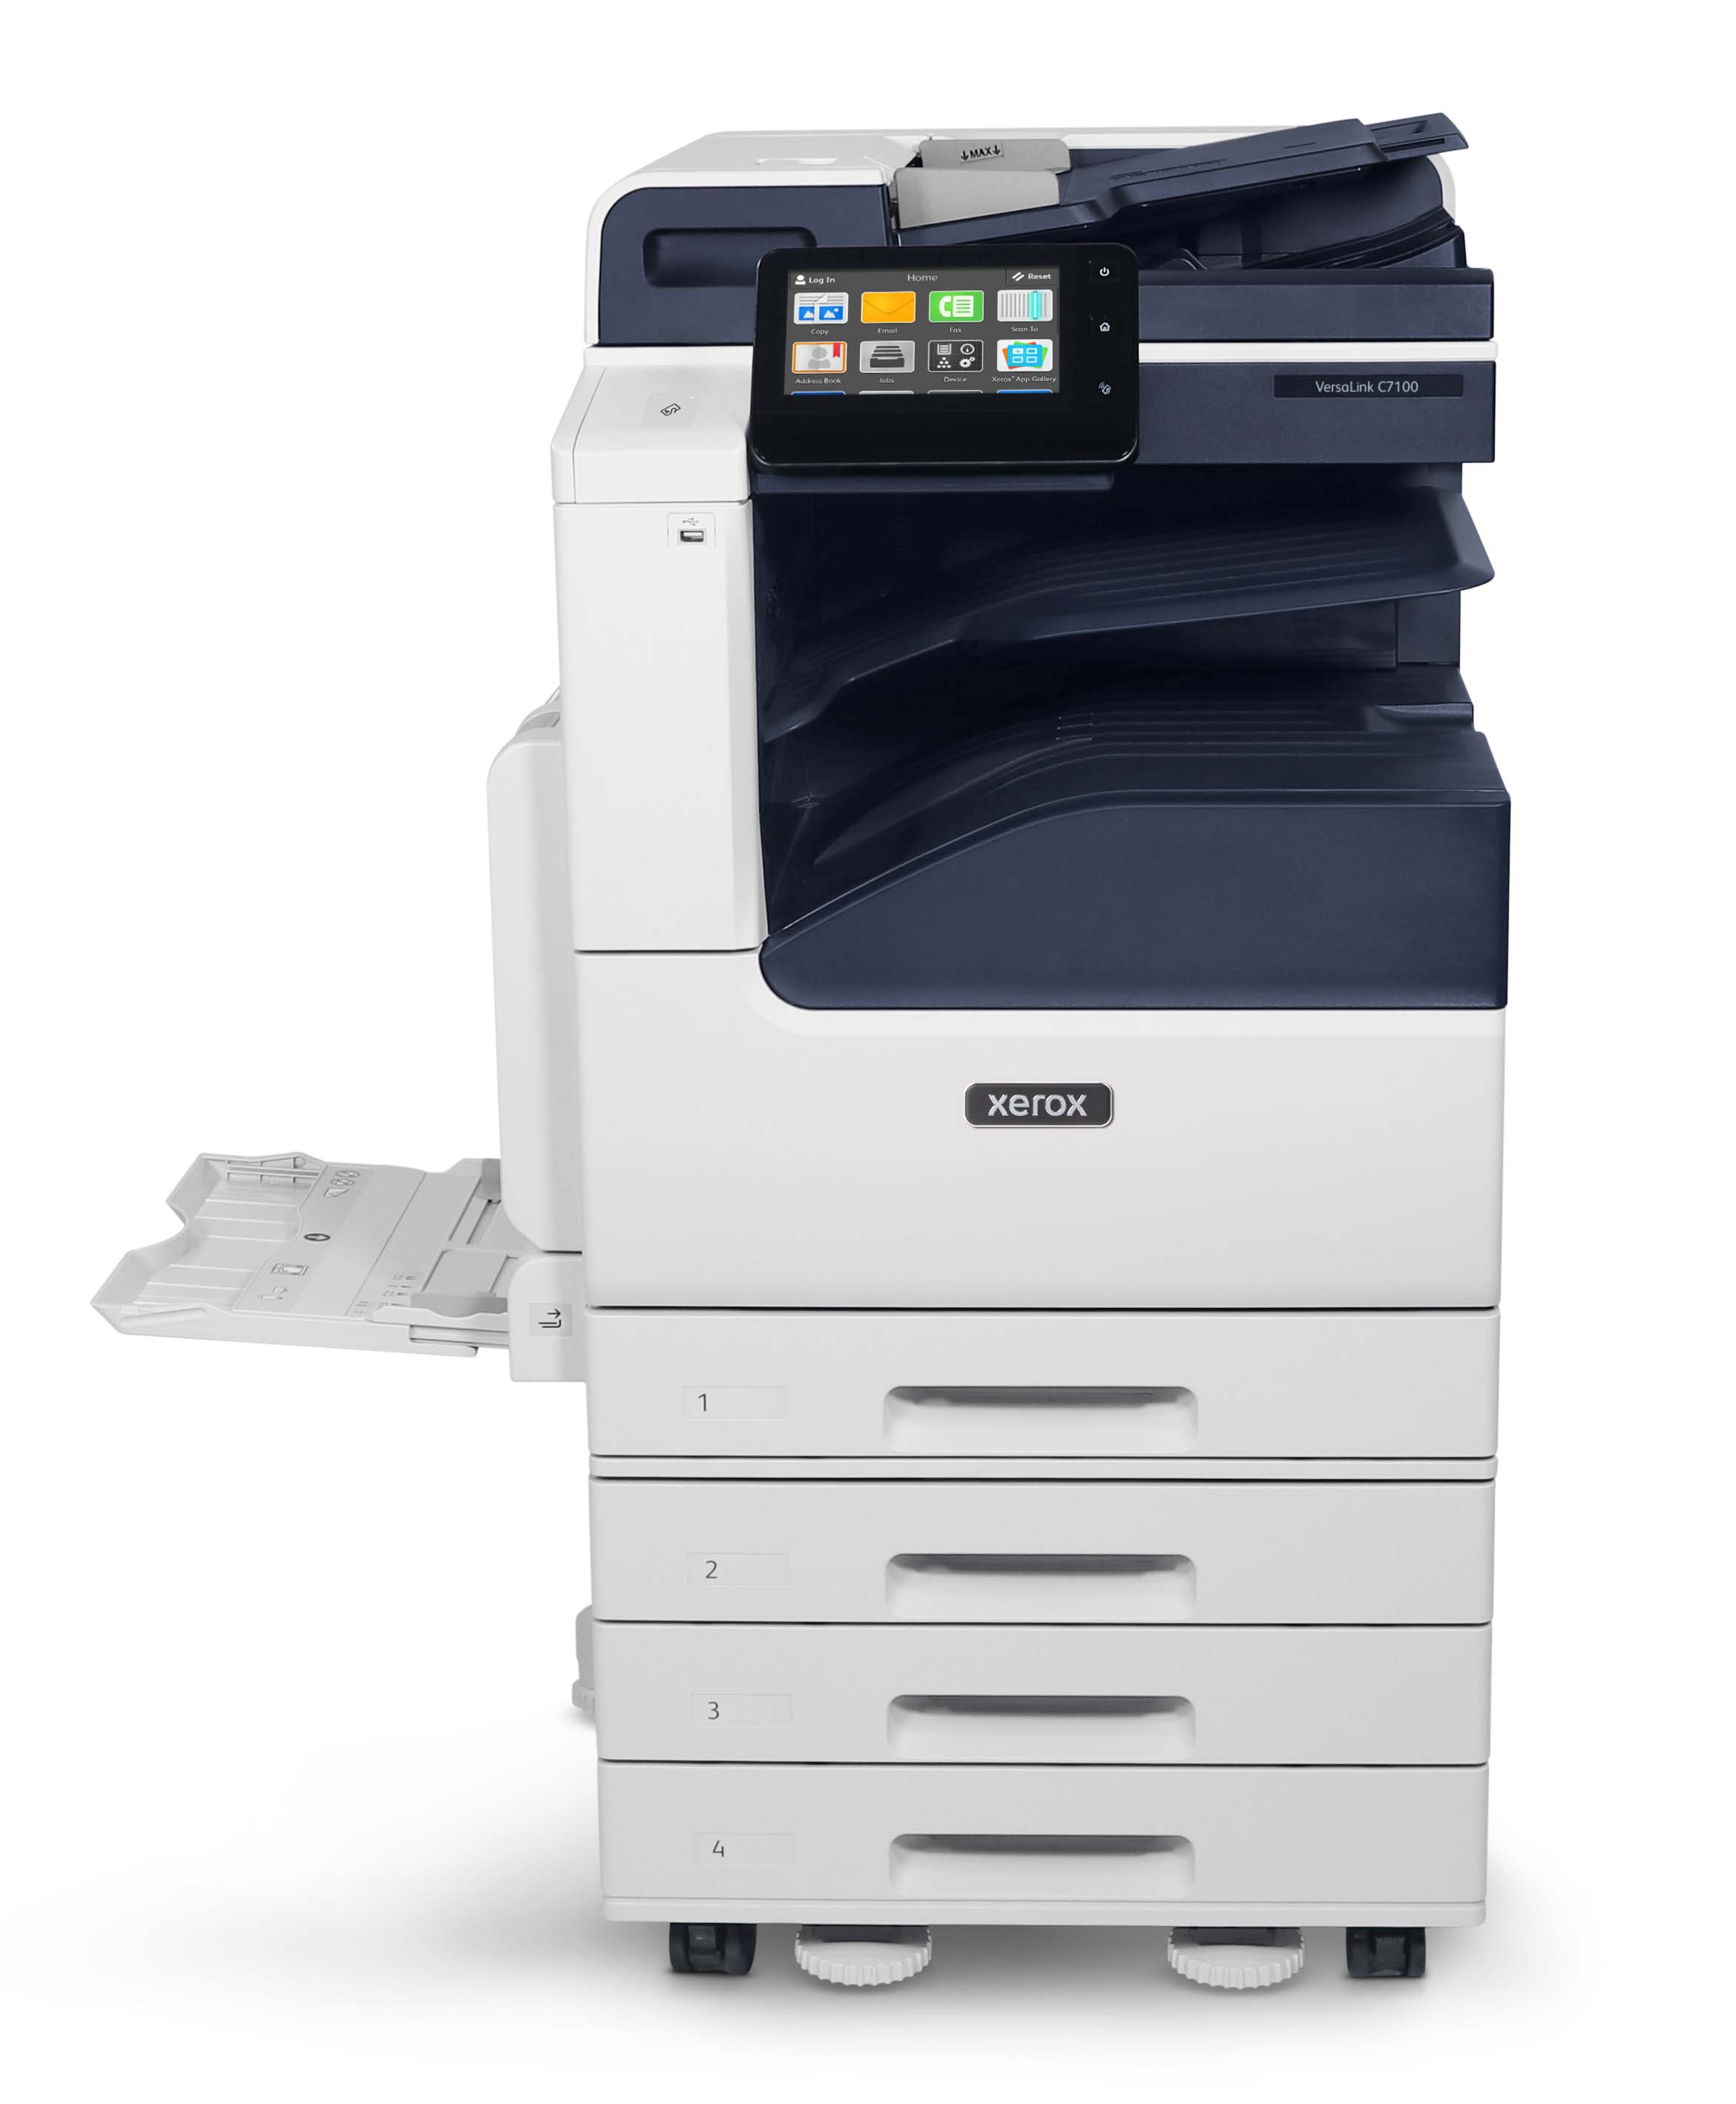 Xerox VersaLink C7125 Colour MultiFunction Printer - Four trays